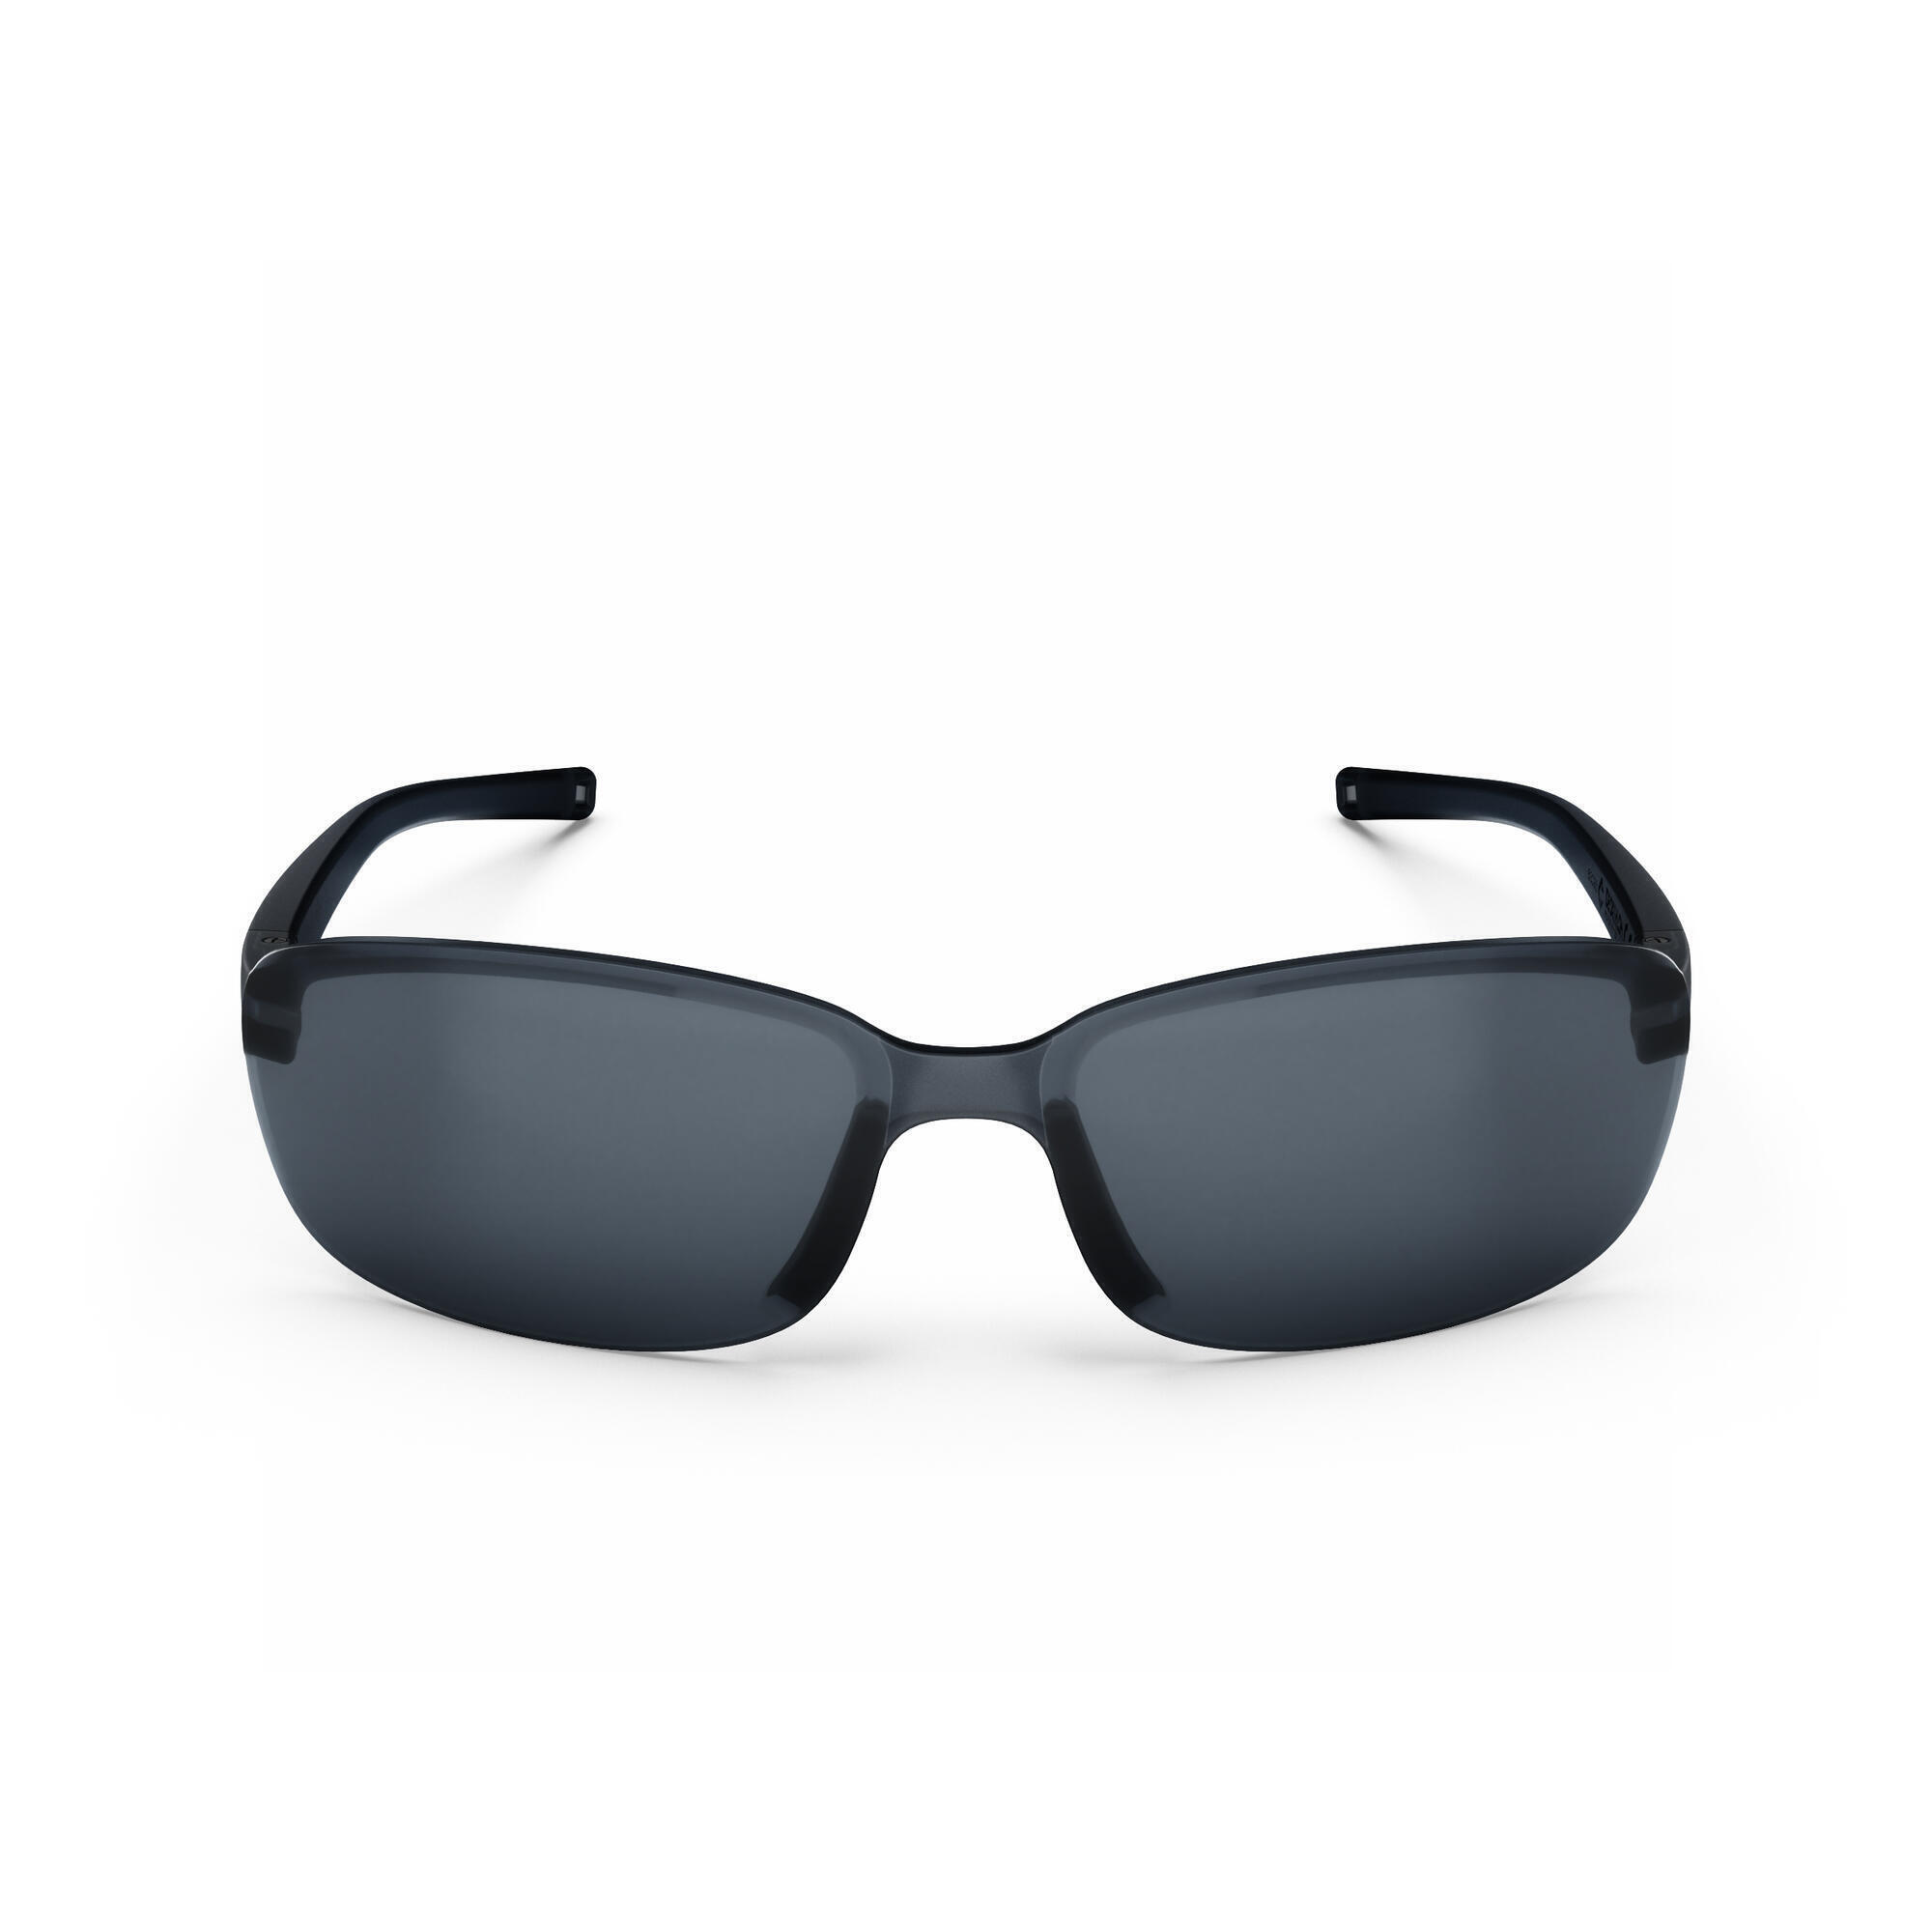 Adult Polarised Hiking Sunglasses - MH100 - Category 3 2/10